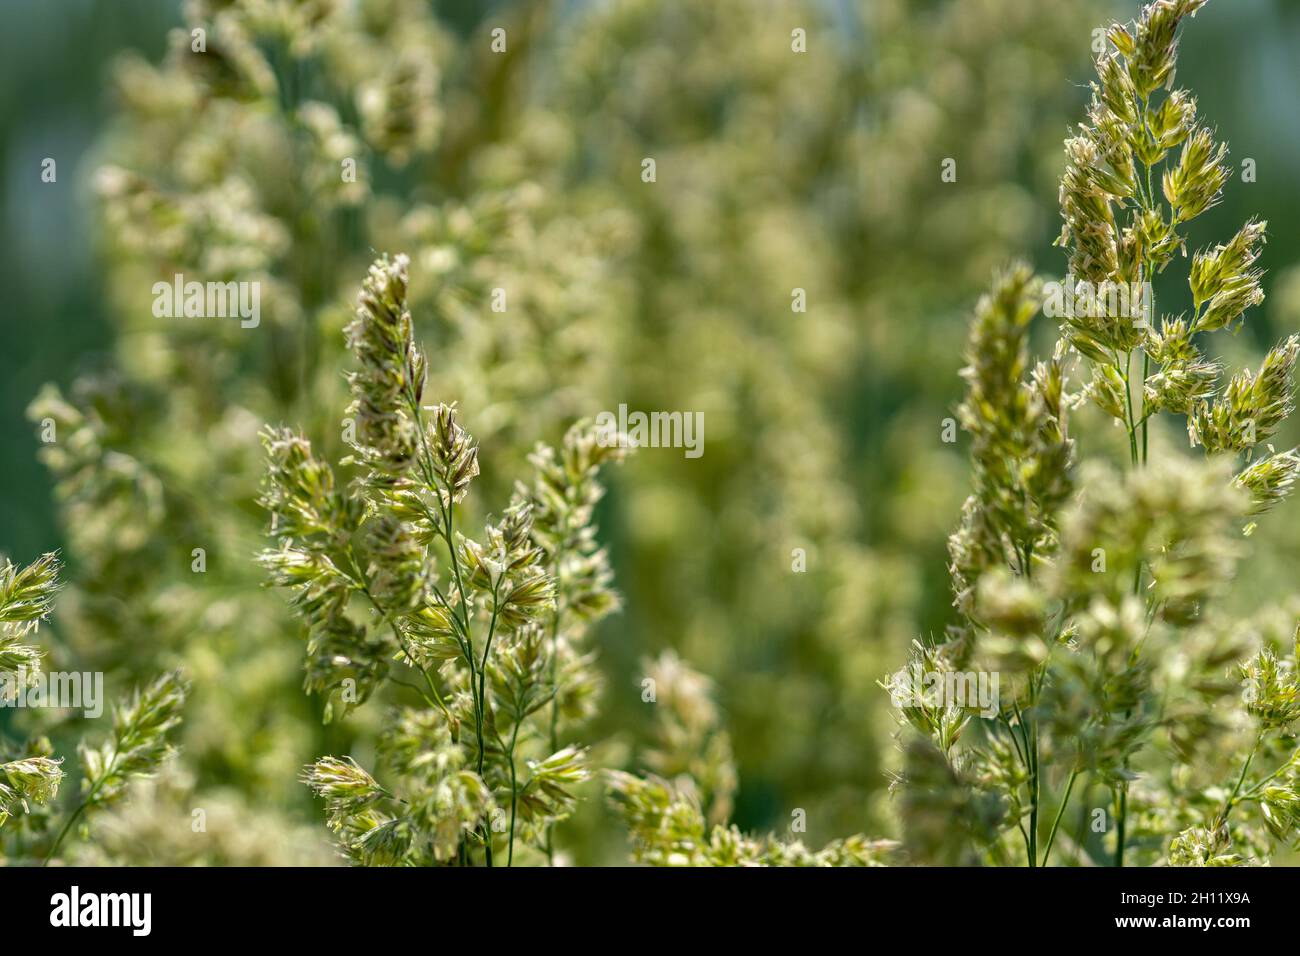 Selective focus shot of Poa trivialis plants Stock Photo